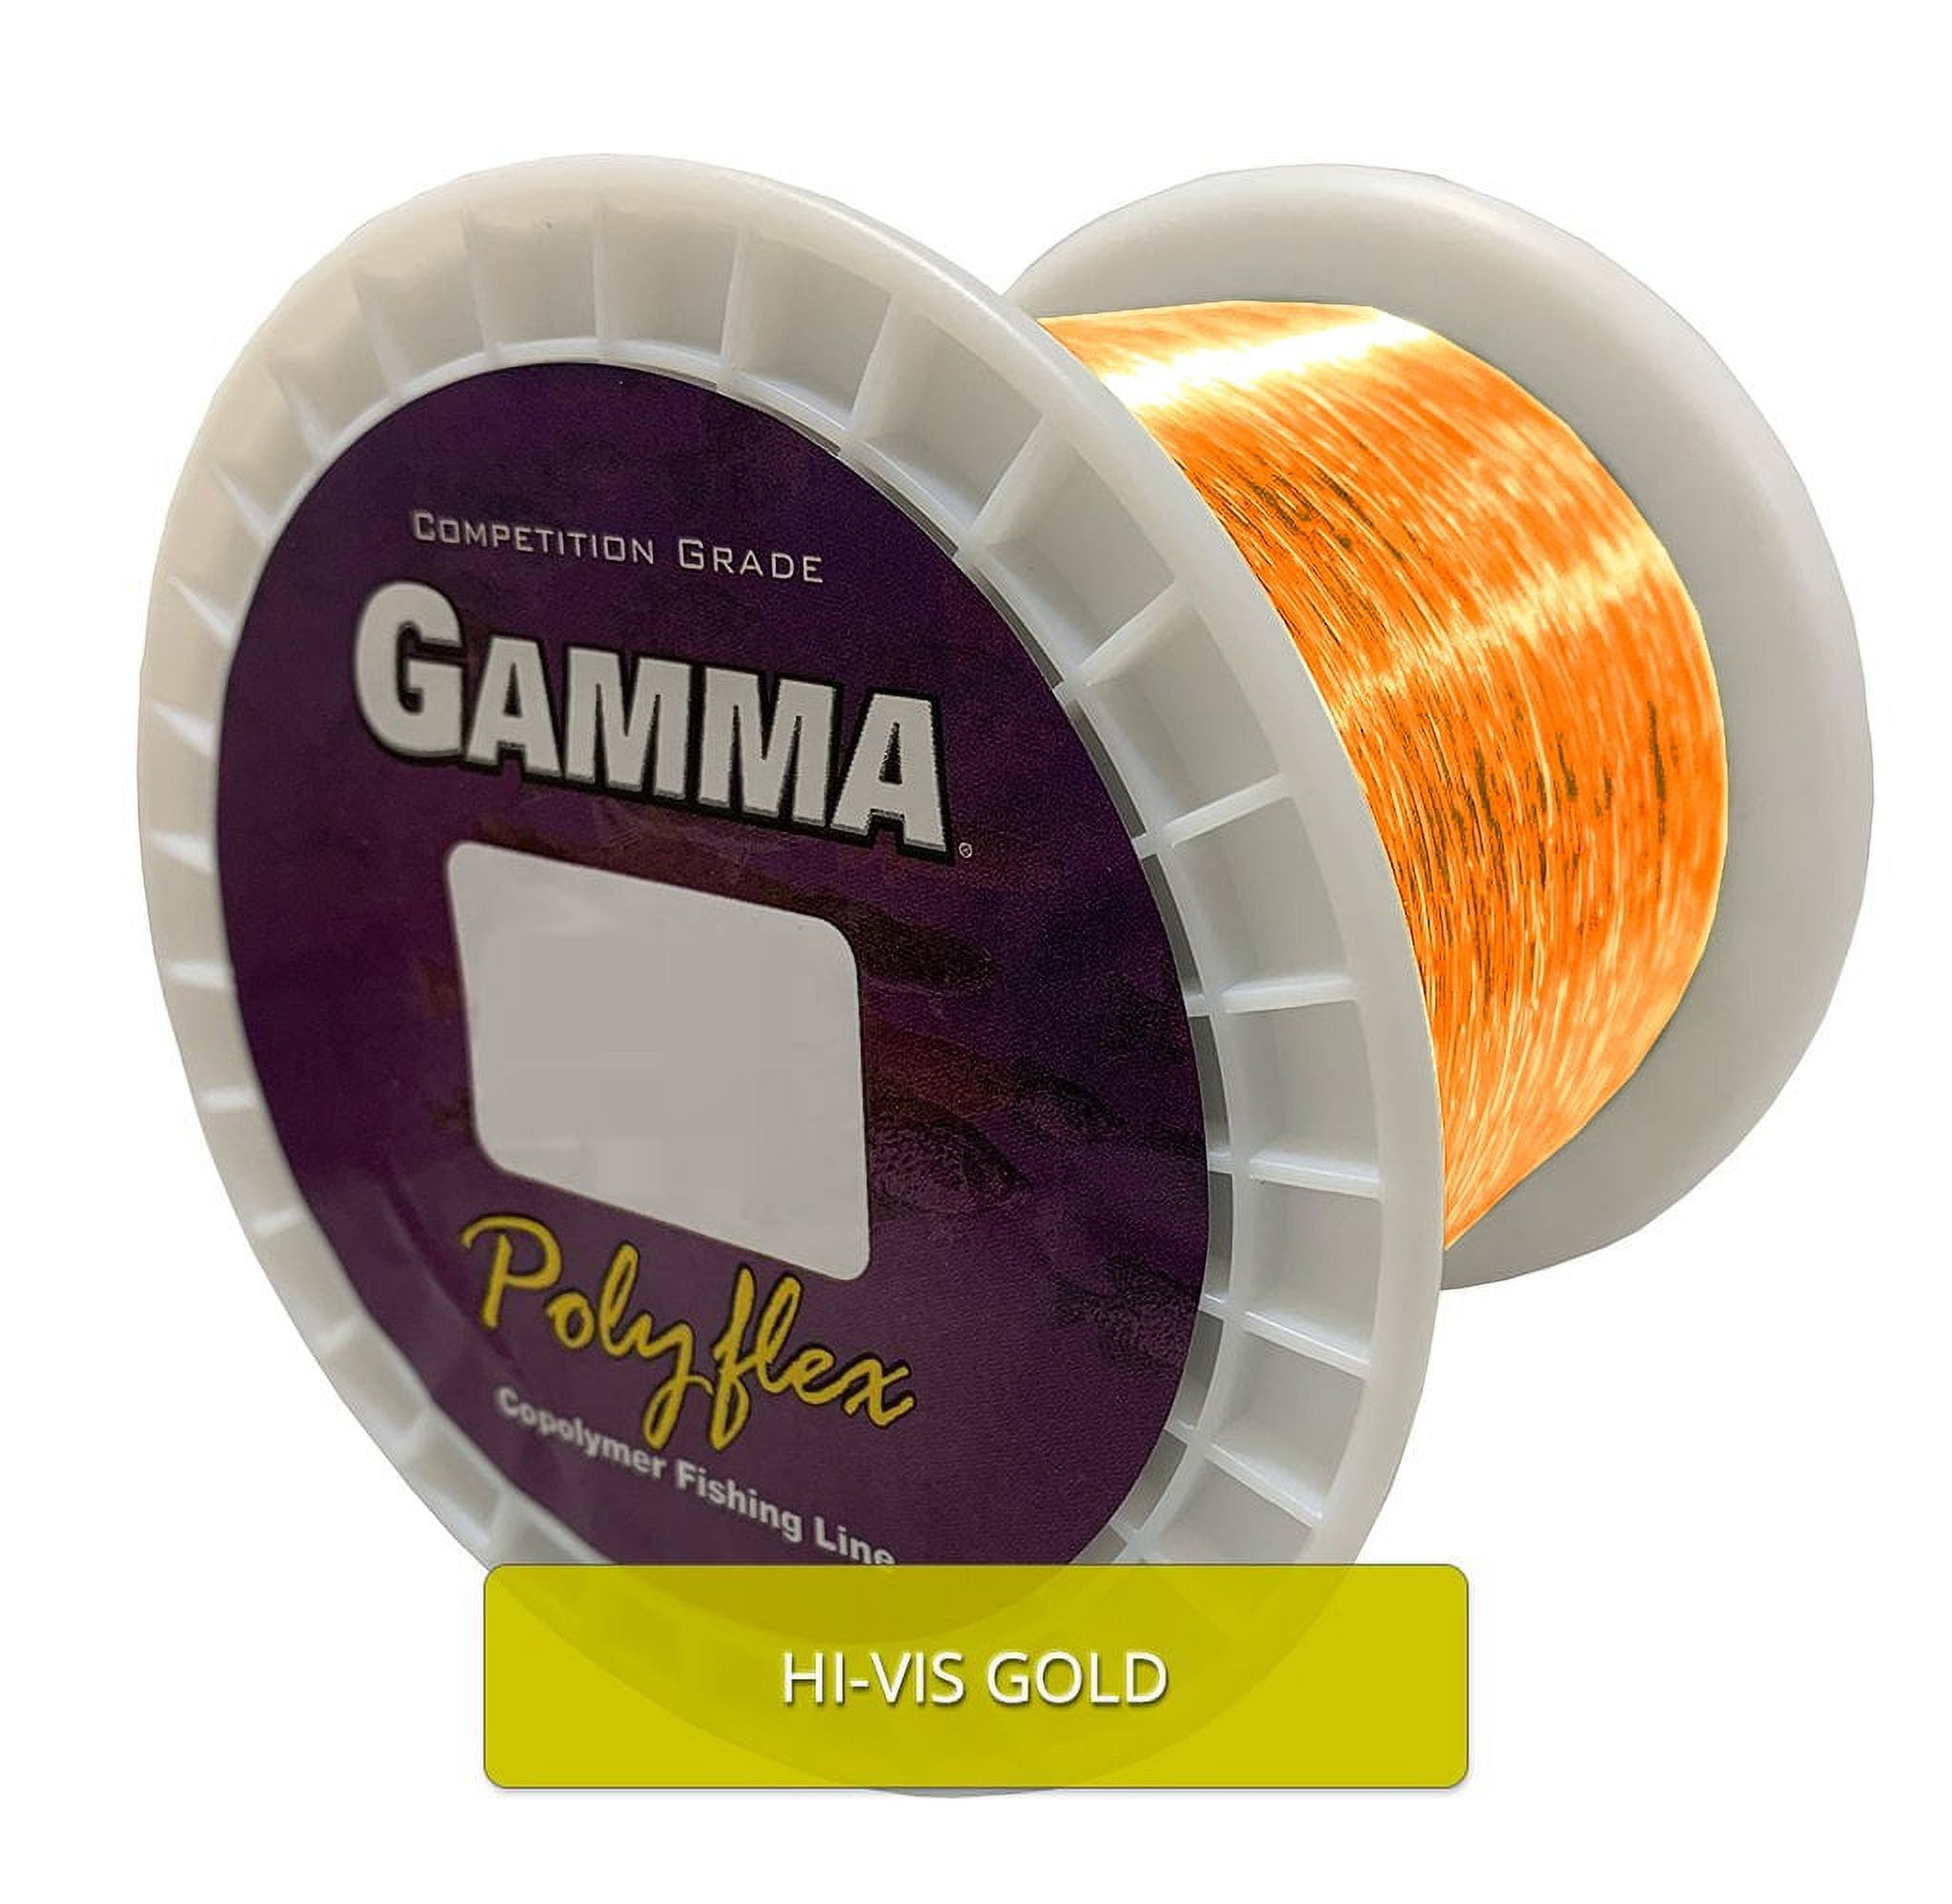 Gamma PolyFlex Copolymer Fishing Line Bulk Spool, Hi-Vis Gold, 30lb, 1650yd, Size: 30 lbs